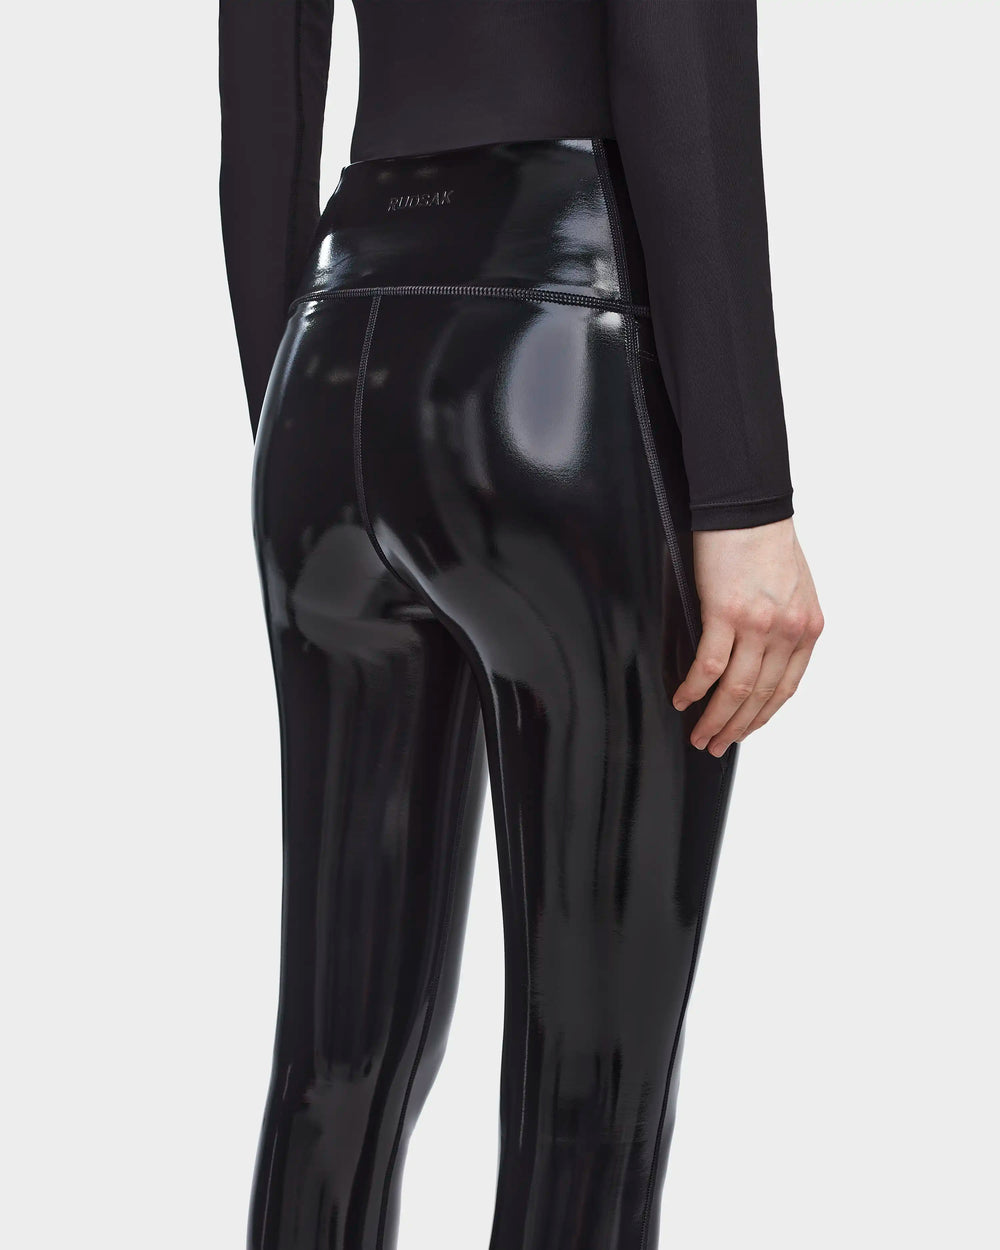 shirin p women's patent vegan leather leggings